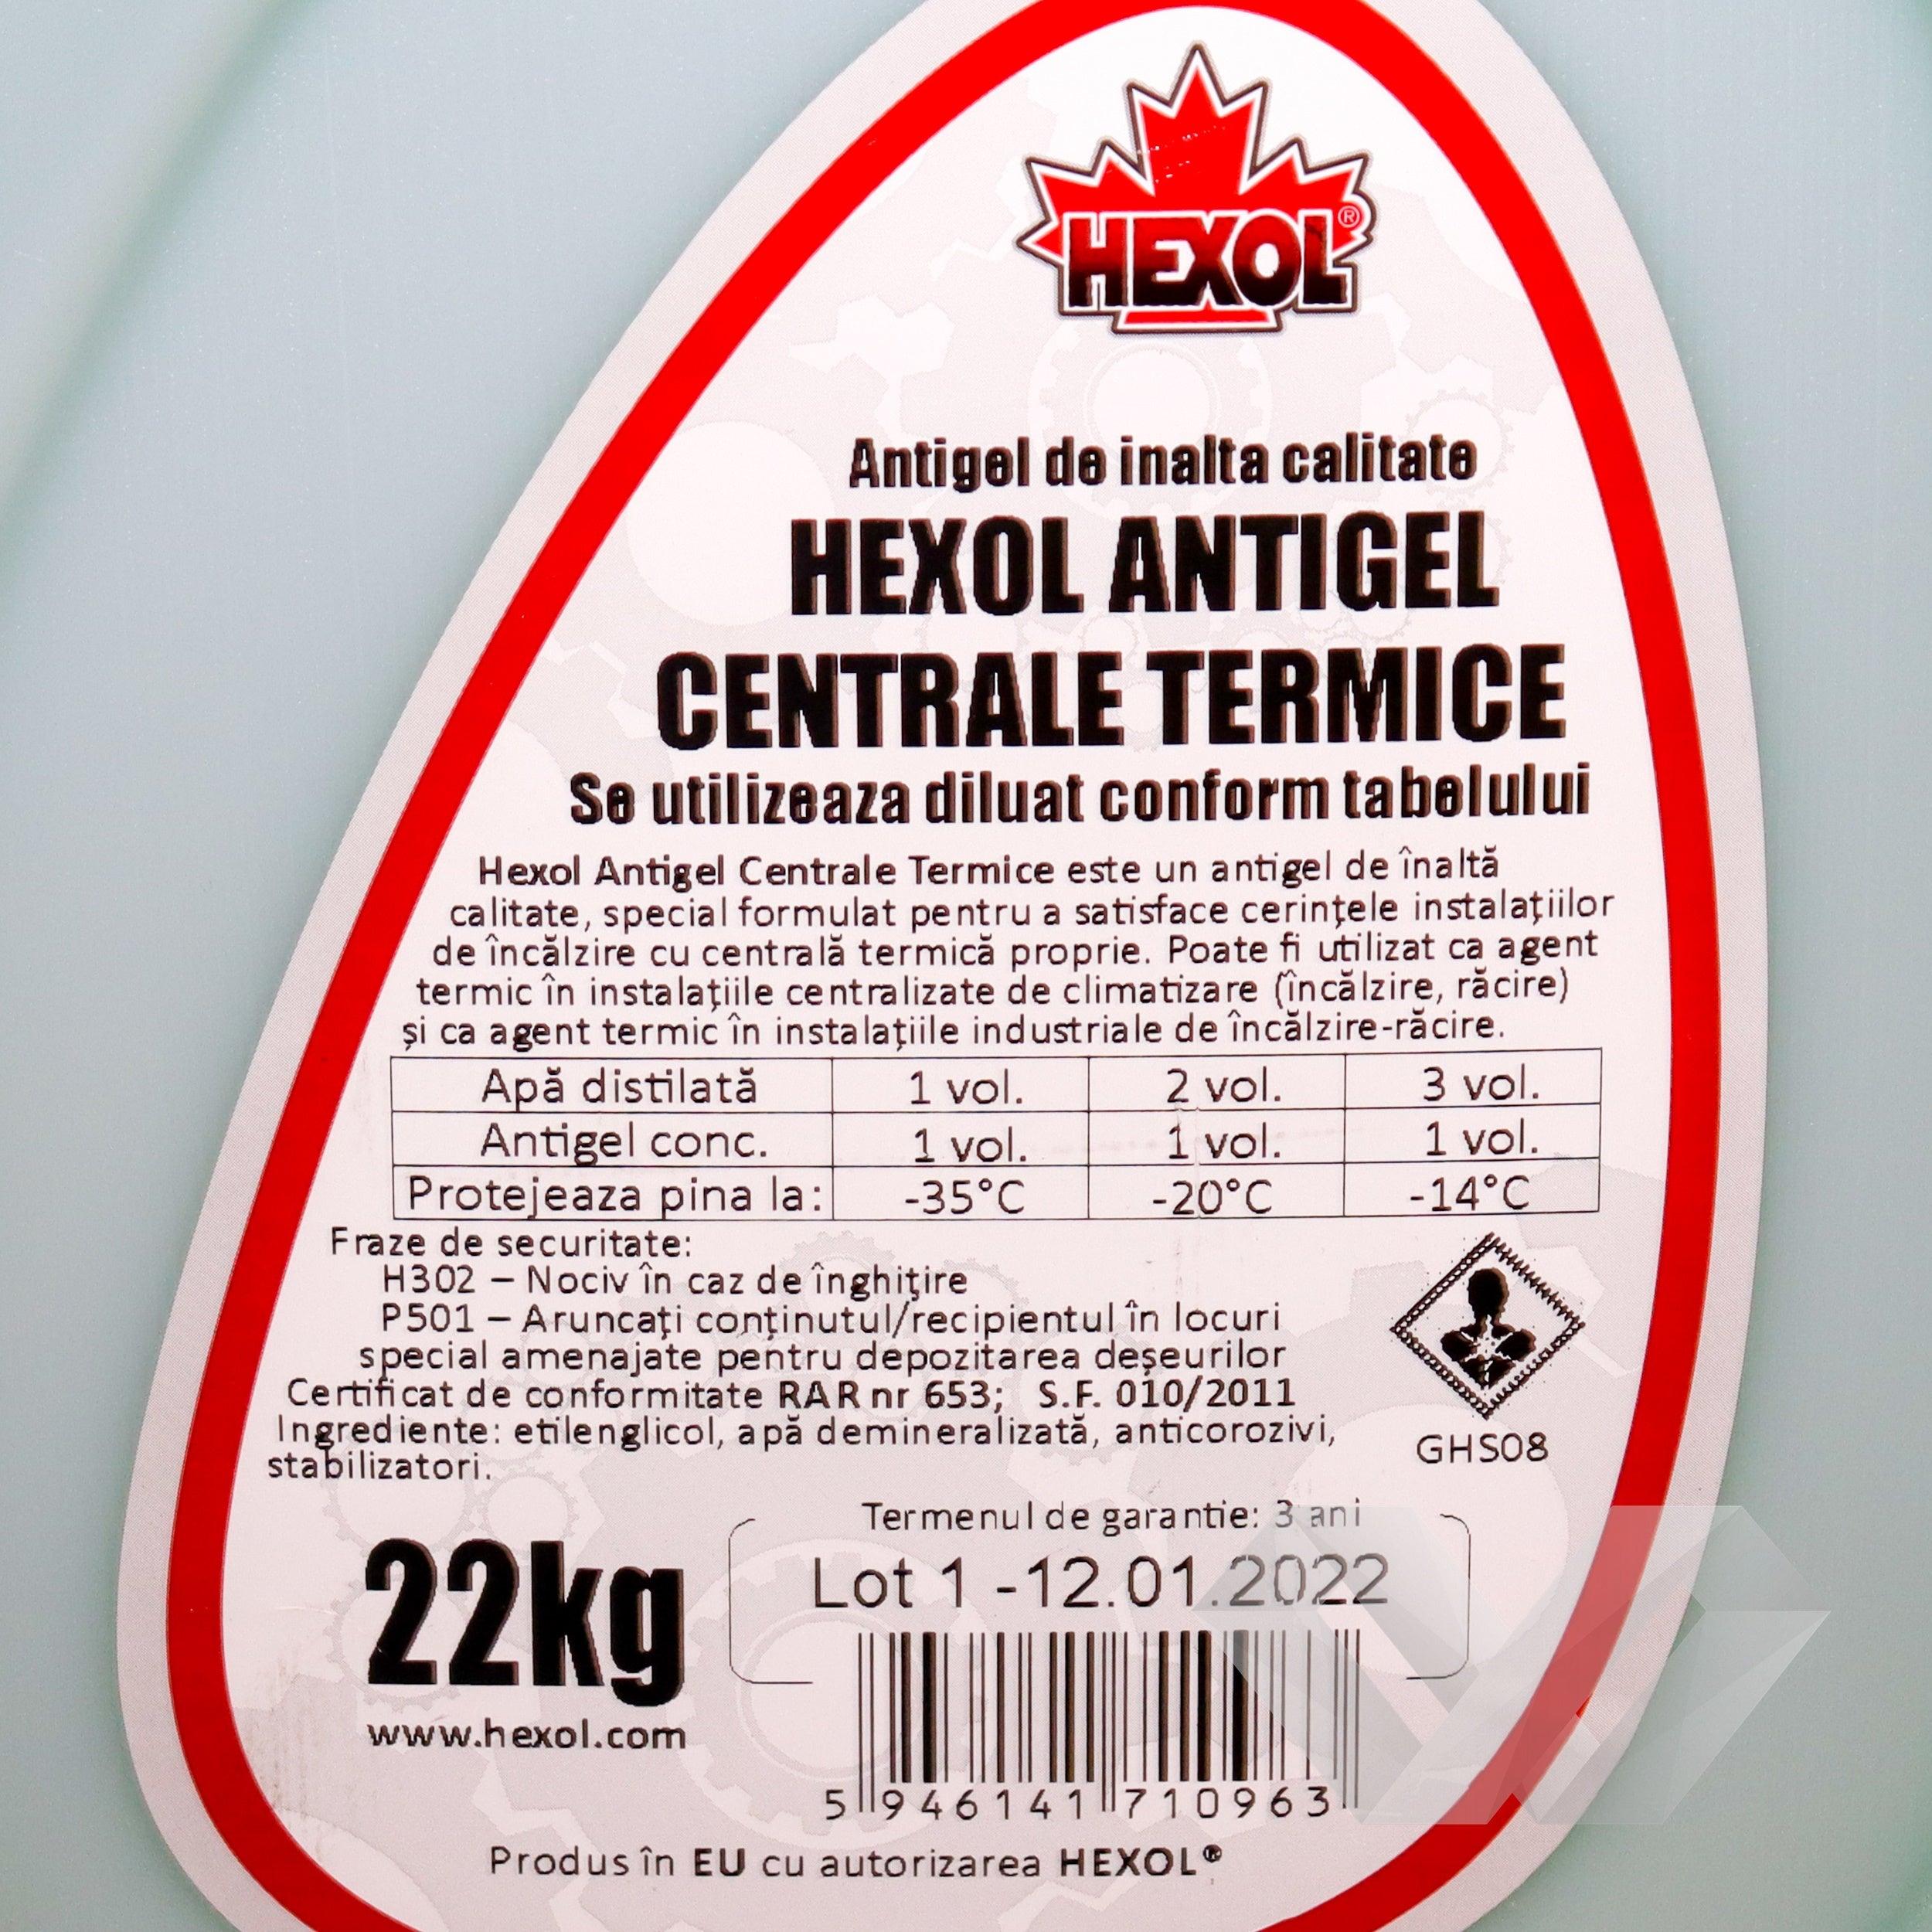 Antigel verde G11 centrale termice concentrat Hexol, -35°C, 22kgL